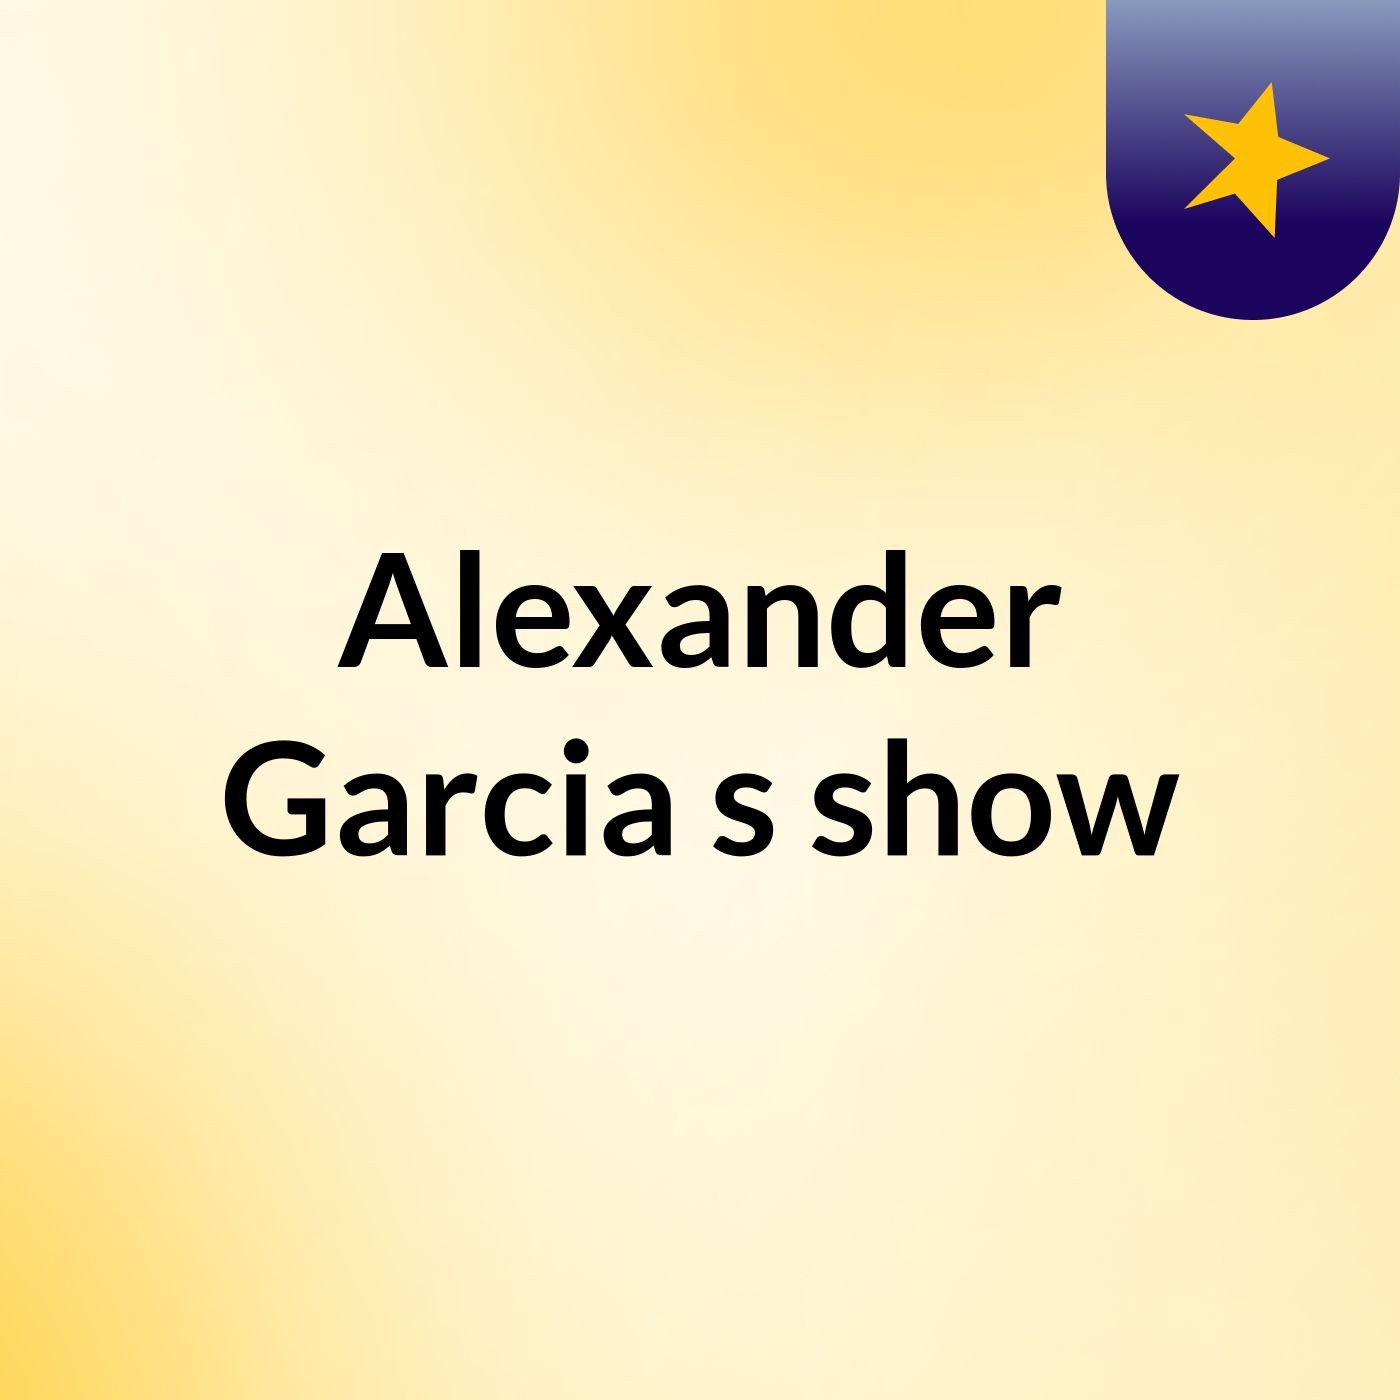 Alexander Garcia's show